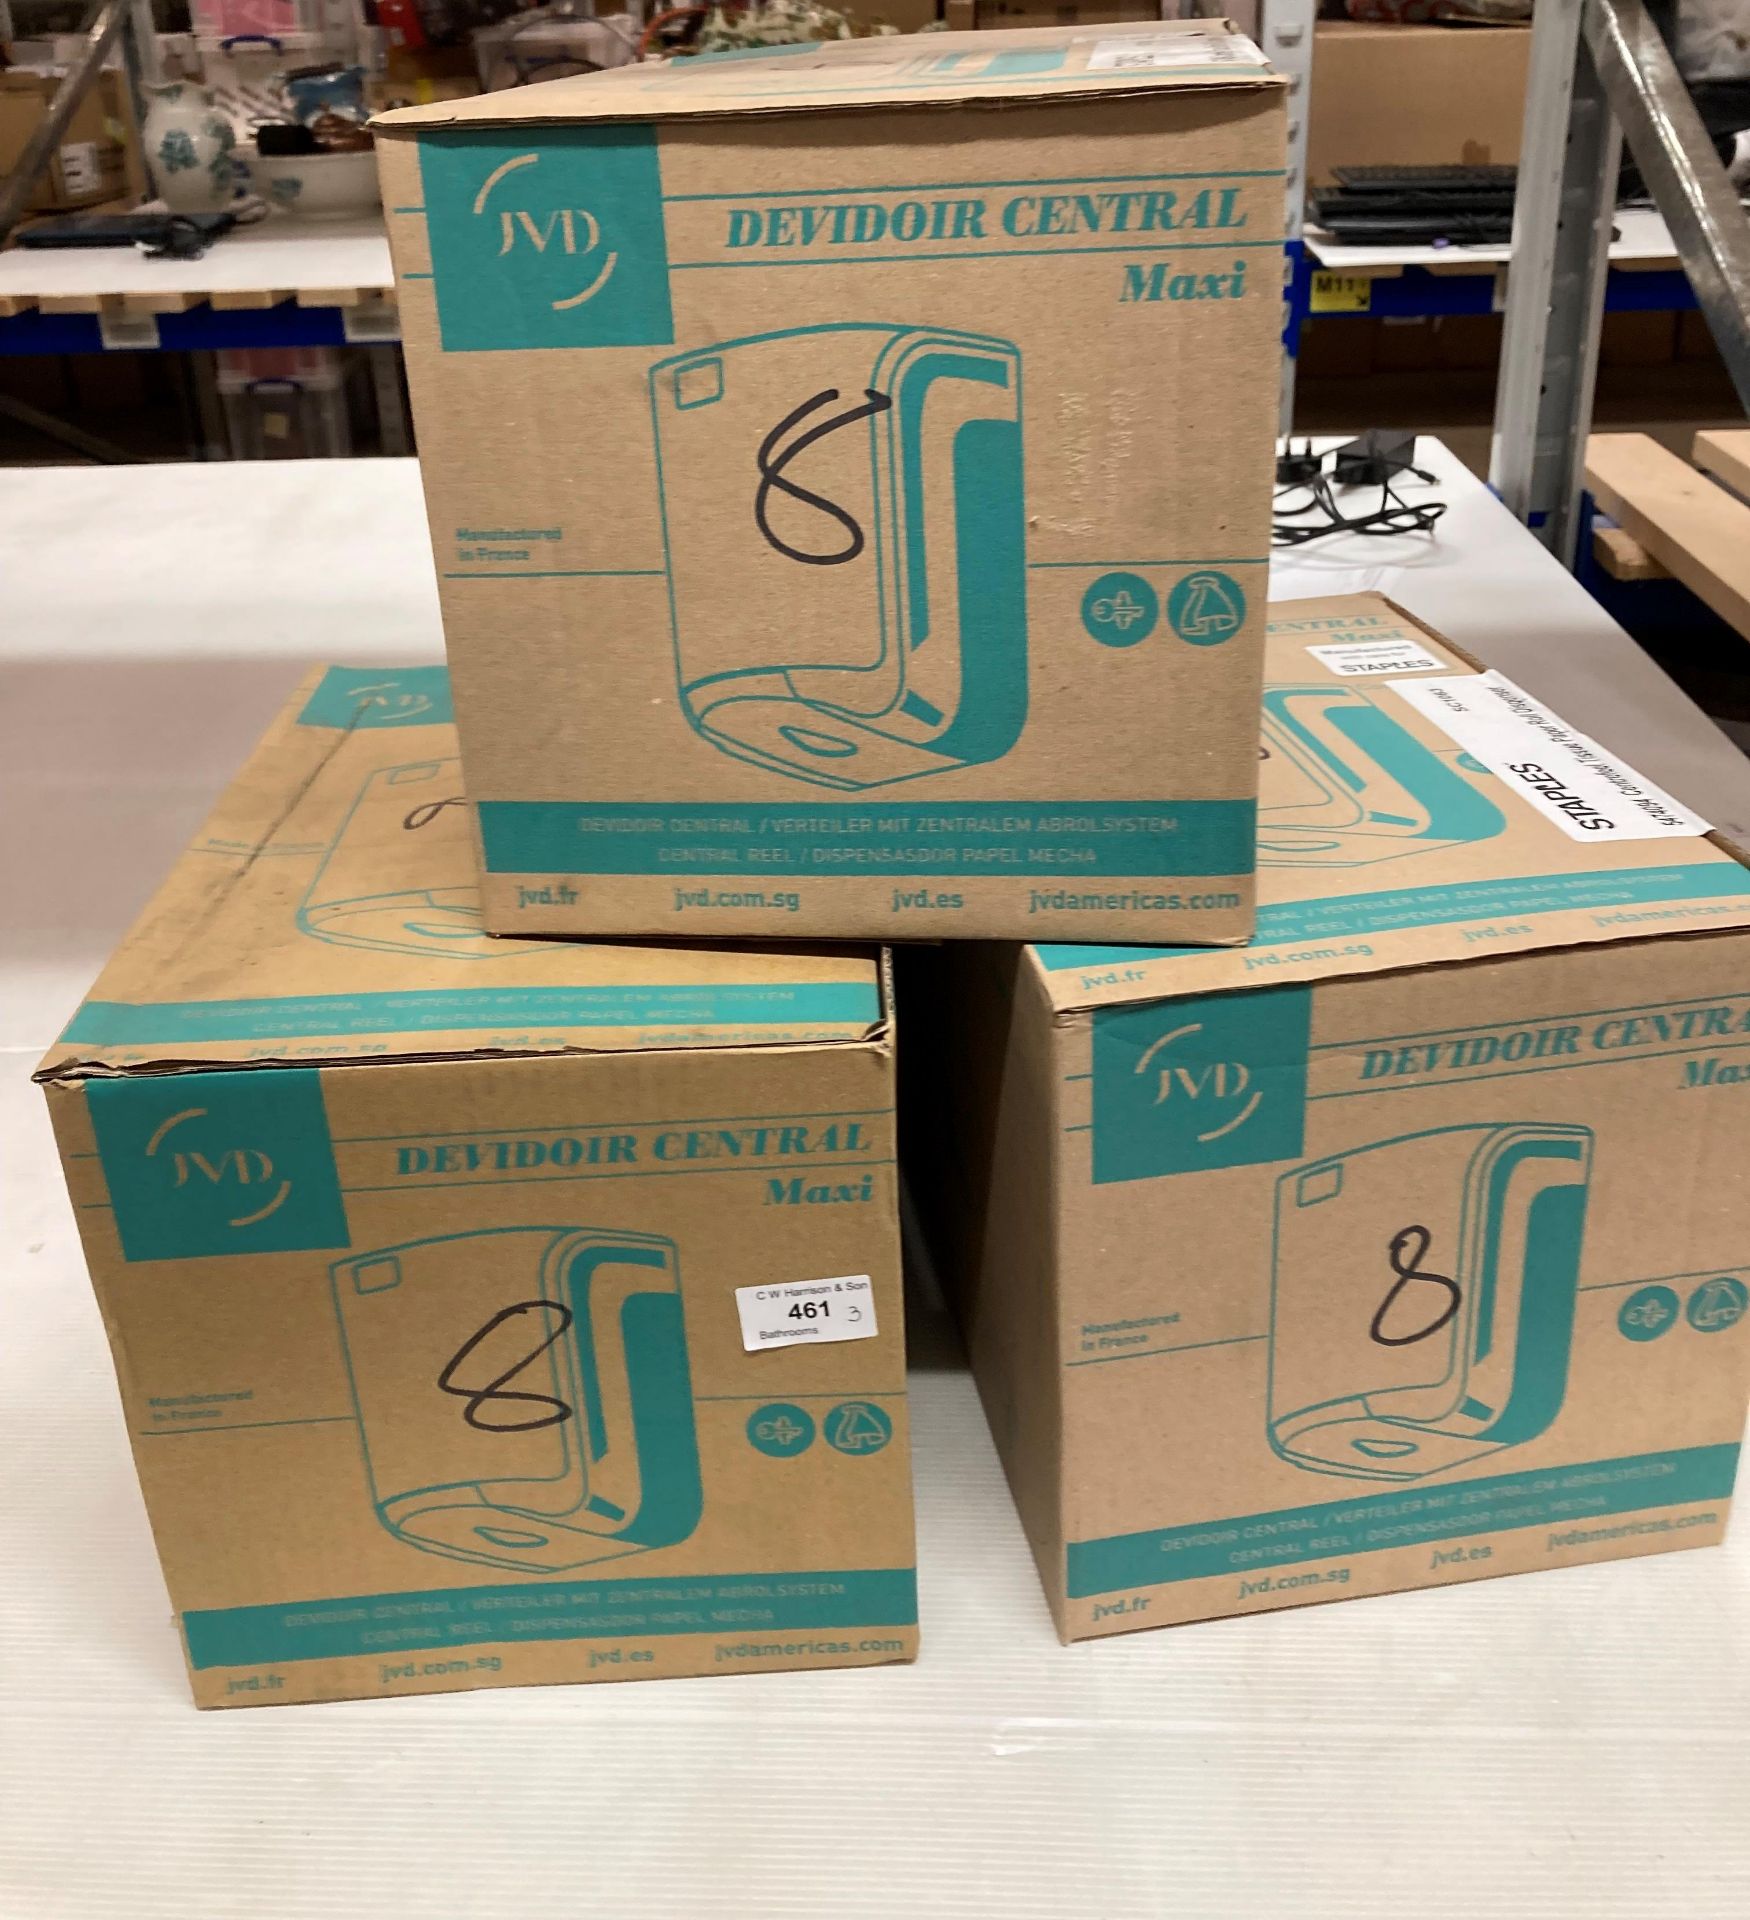 3 x Staples centerfeed blue roll tissue paper maxi dispensers (saleroom location: J12)